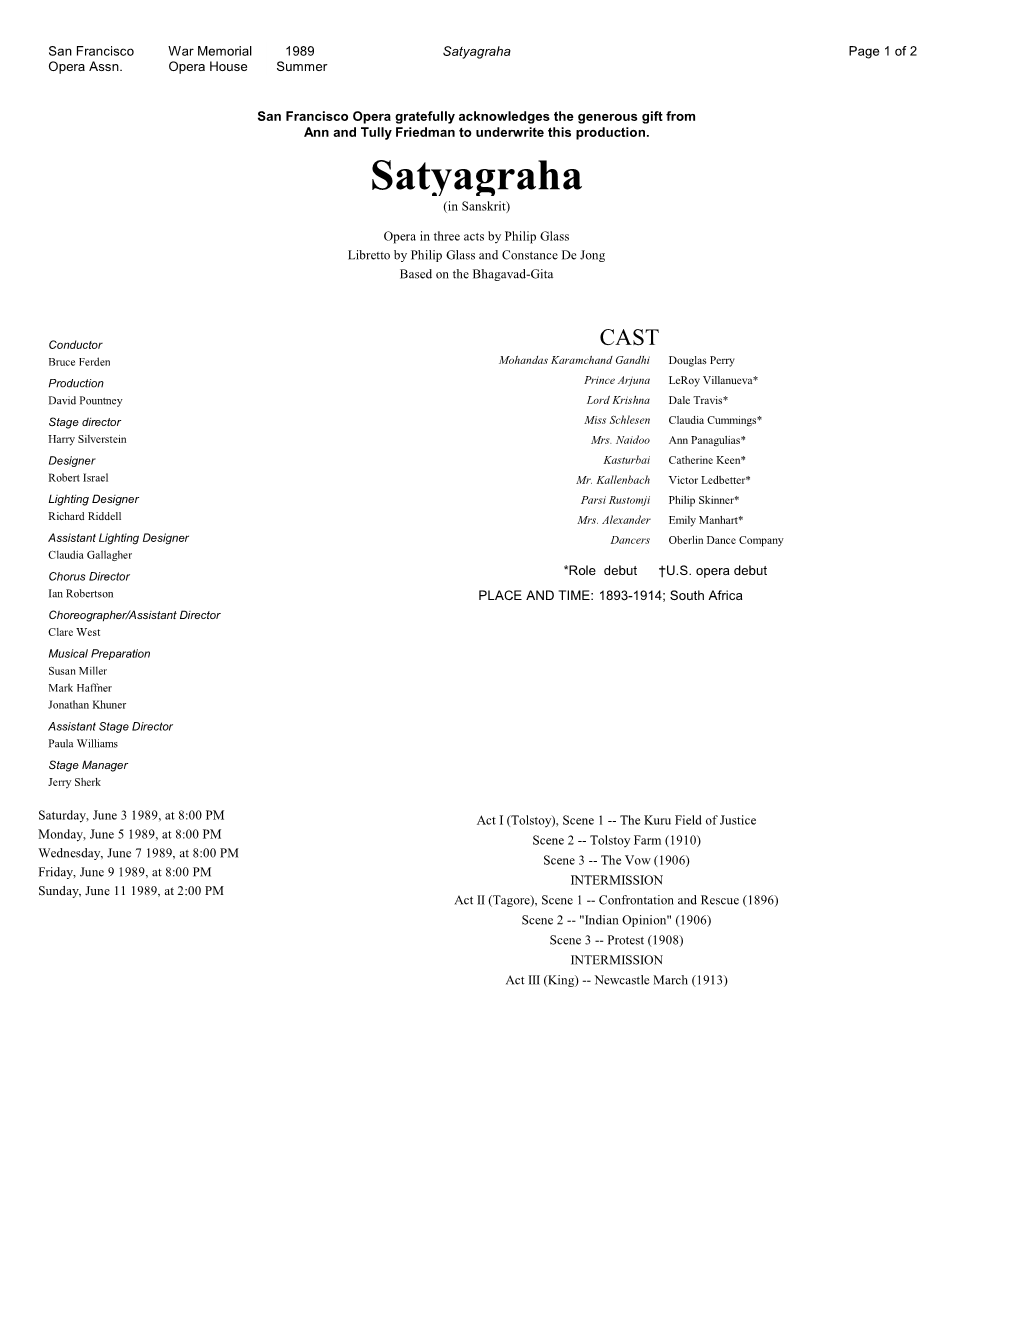 Satyagraha Page 1 of 2 Opera Assn